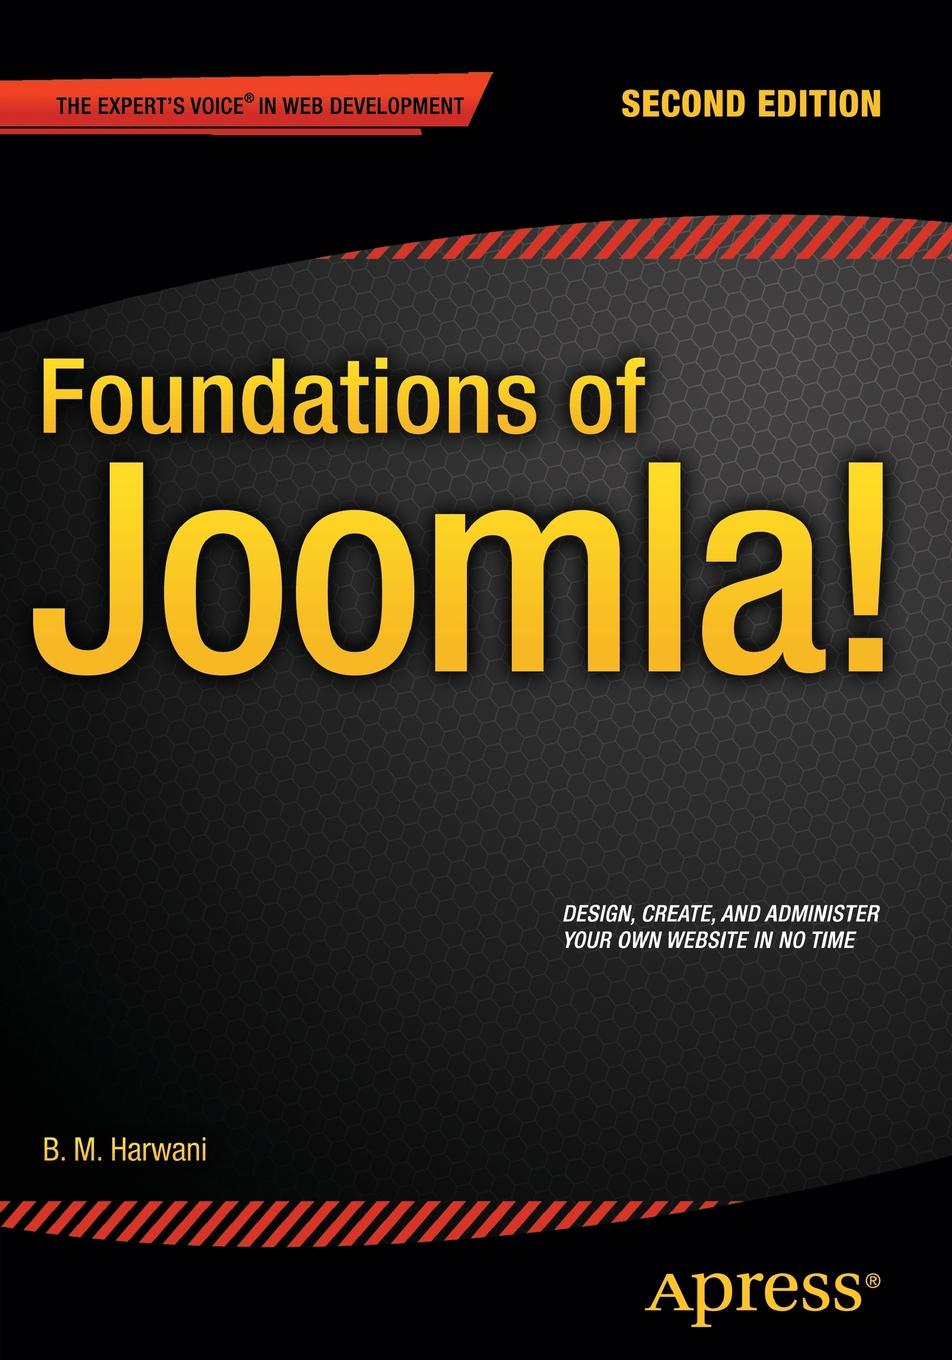 Foundations of Joomla.